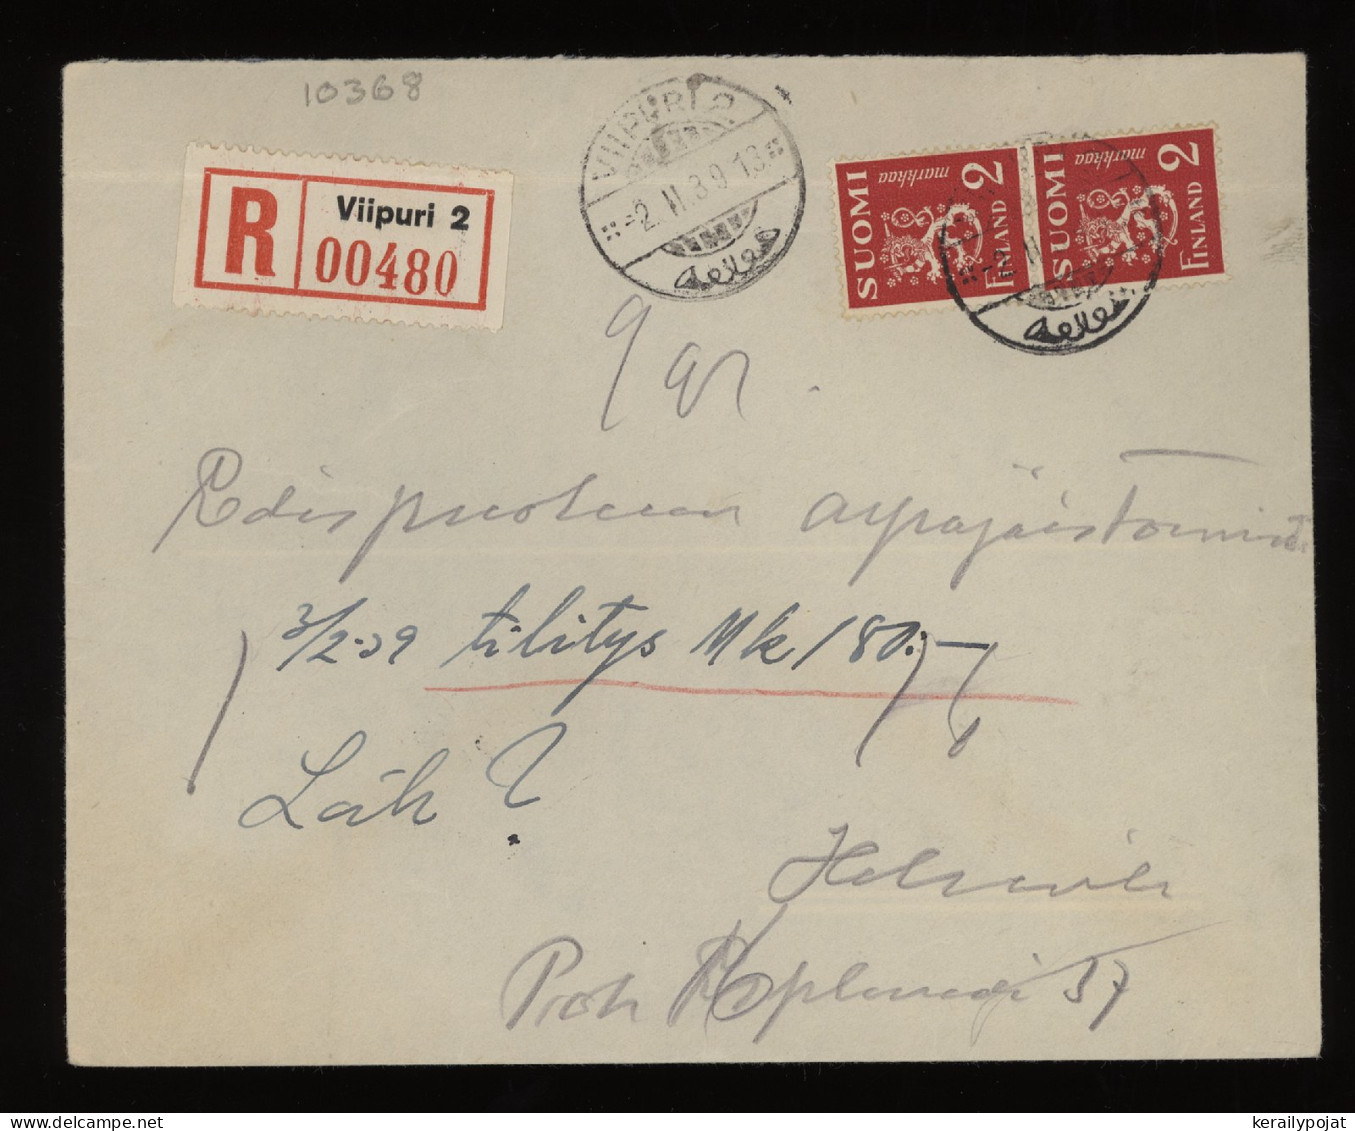 Finland 1939 Viipuri 2 Registered Cover__(10368) - Storia Postale